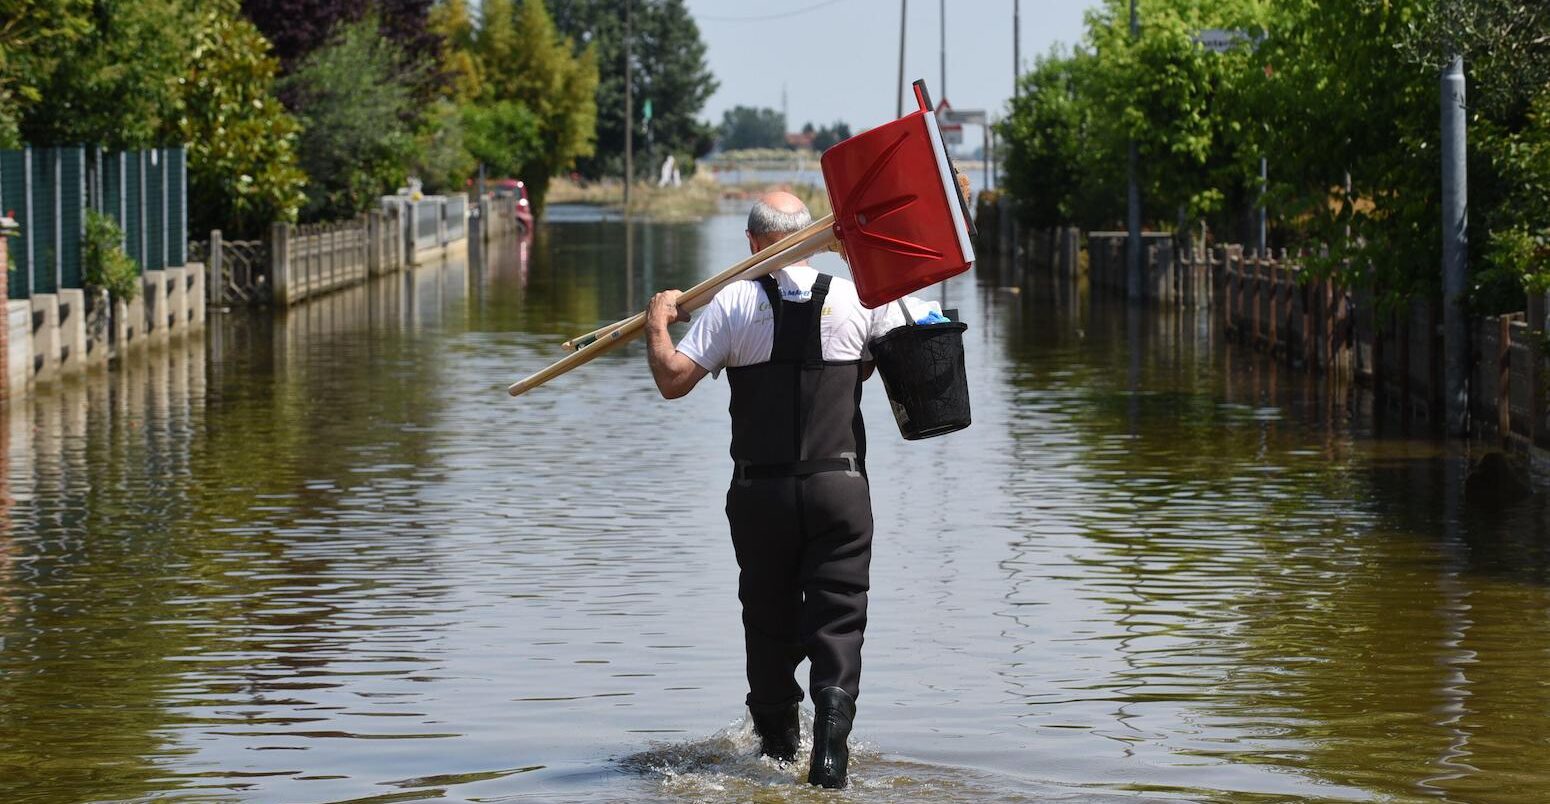 Emilia Romagna region submerged in water days after heavy flood, Ravenna, Italy.